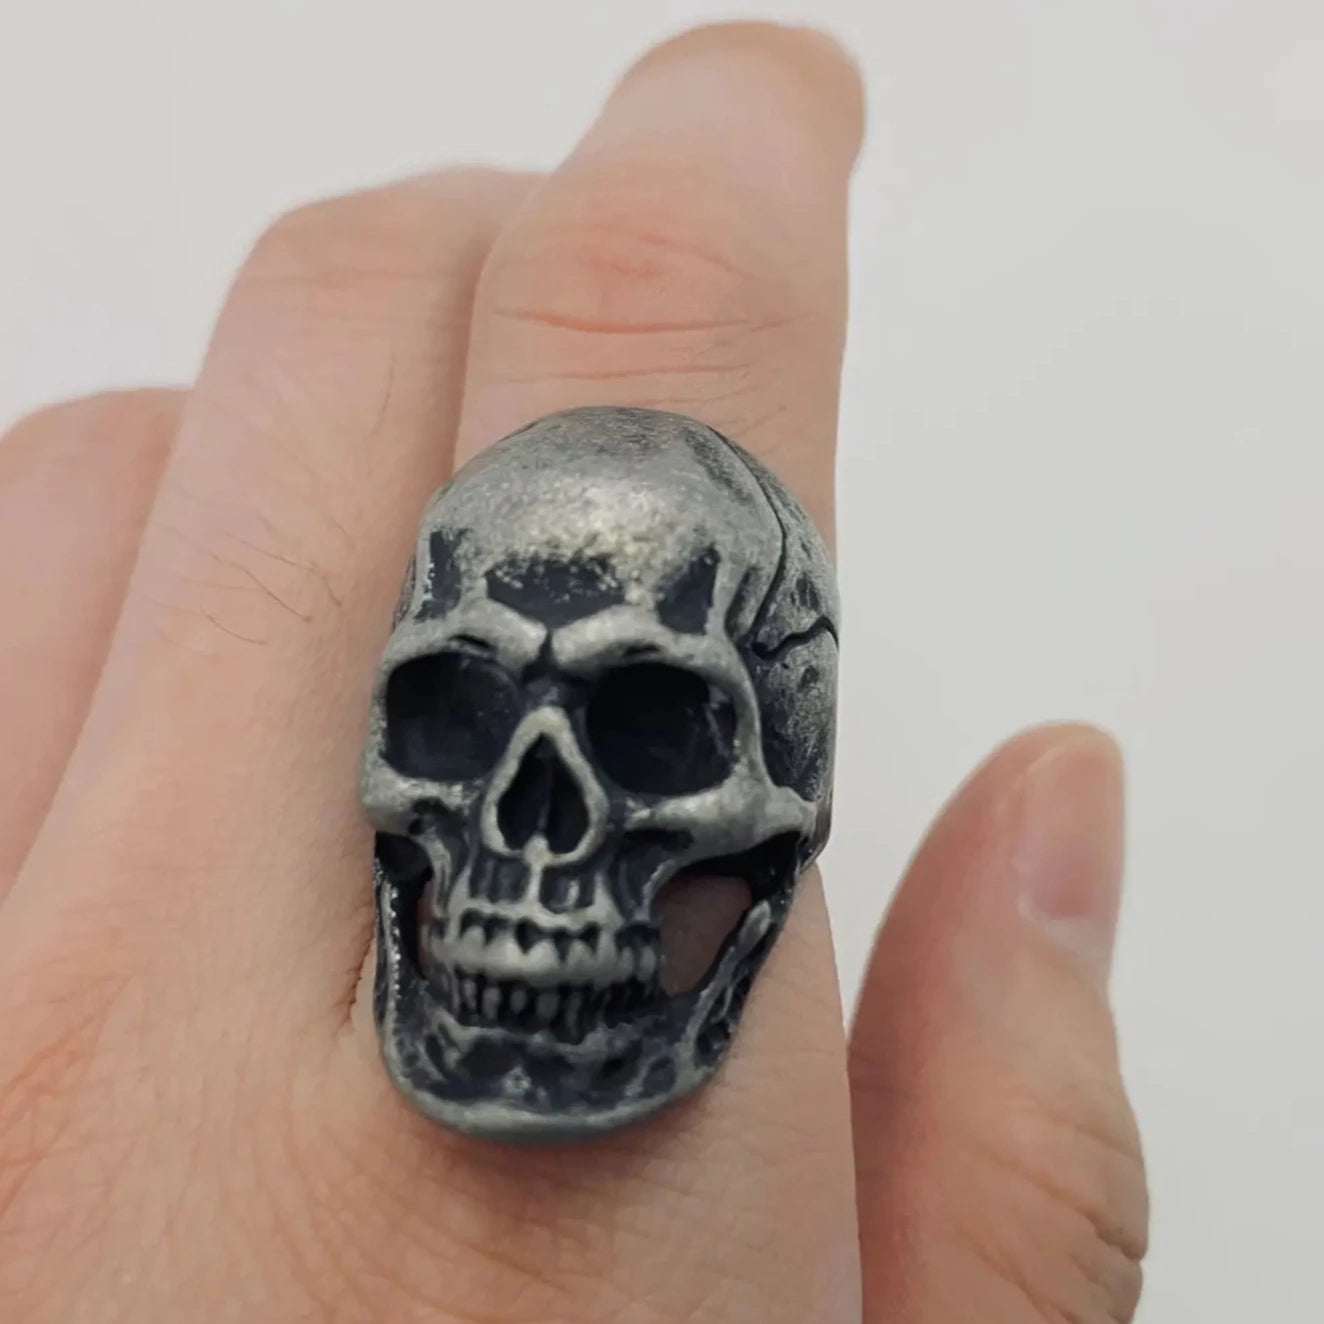 aged finish stainless steel skull ring, shown on a finger